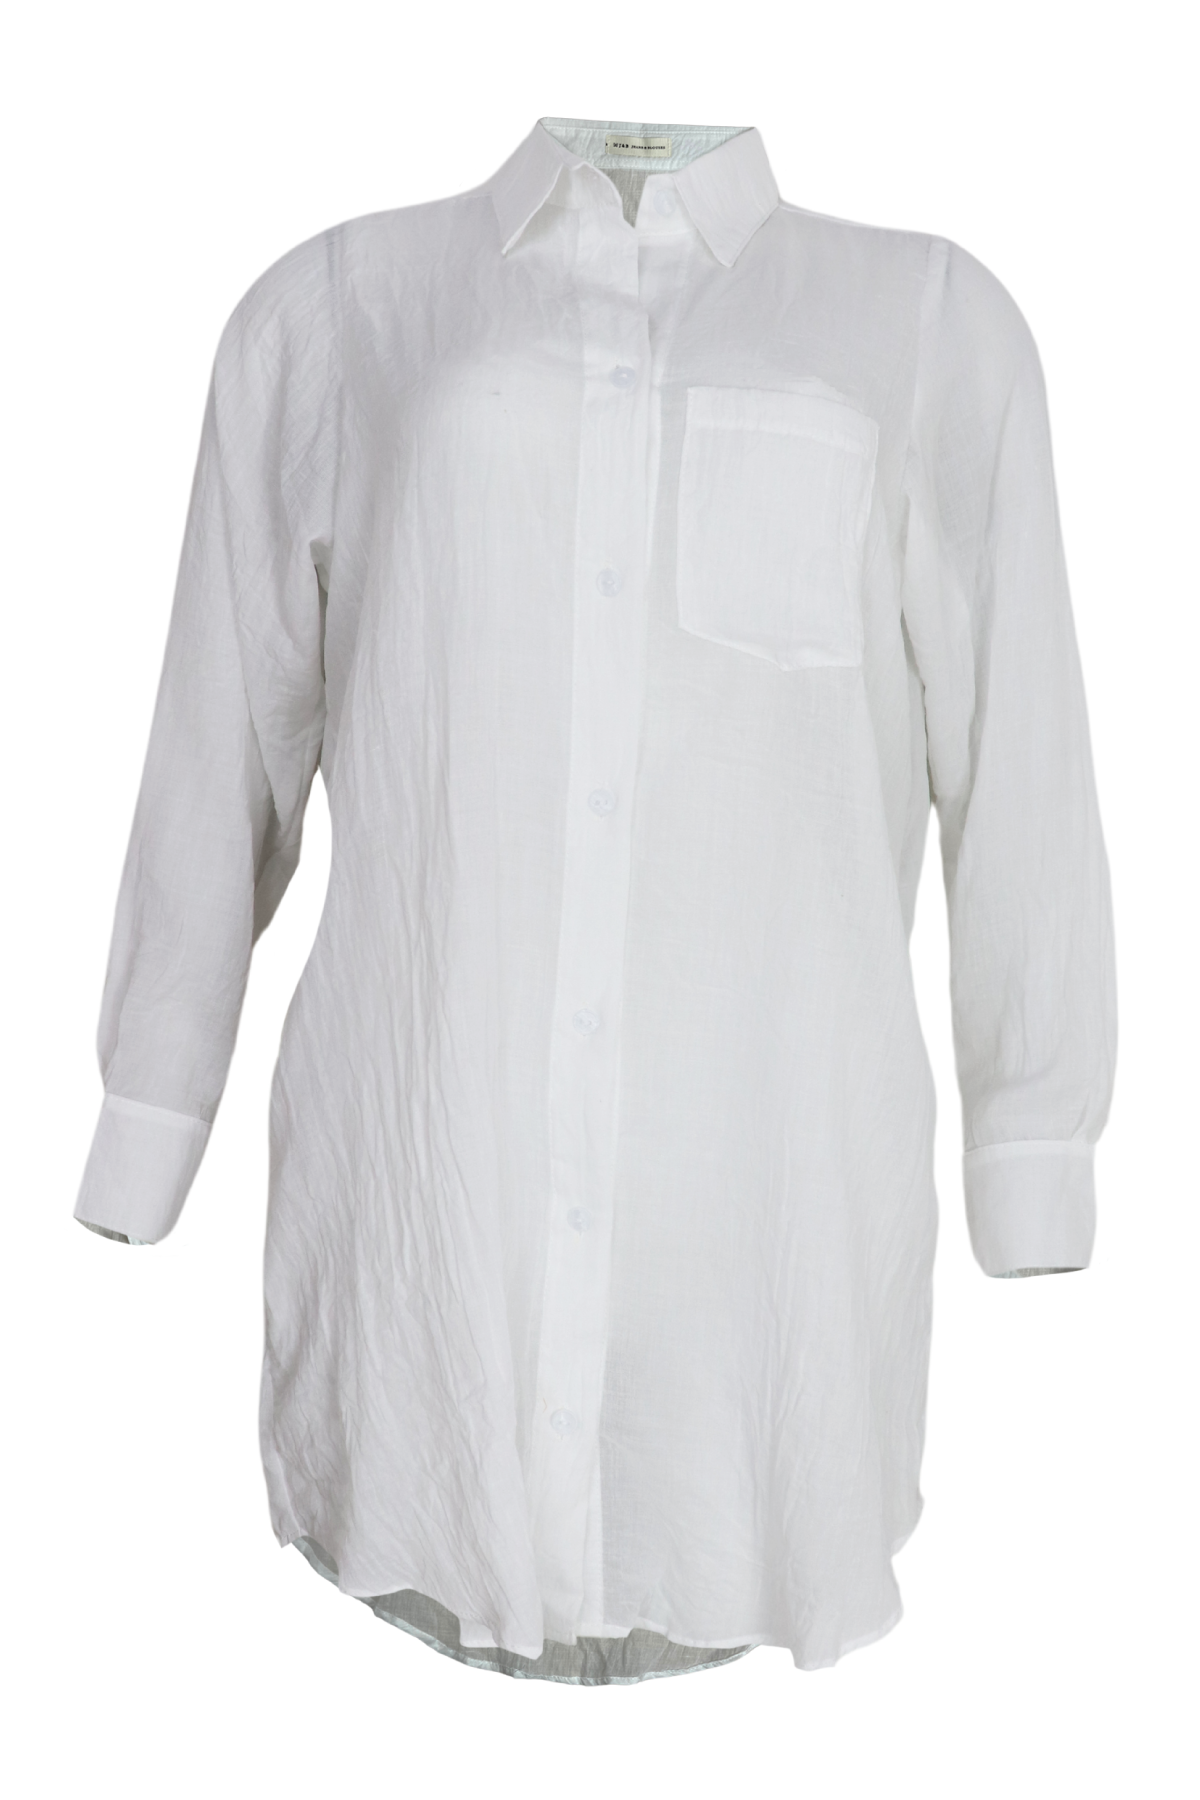 Hermosa camisa manga larga transparente color blanco